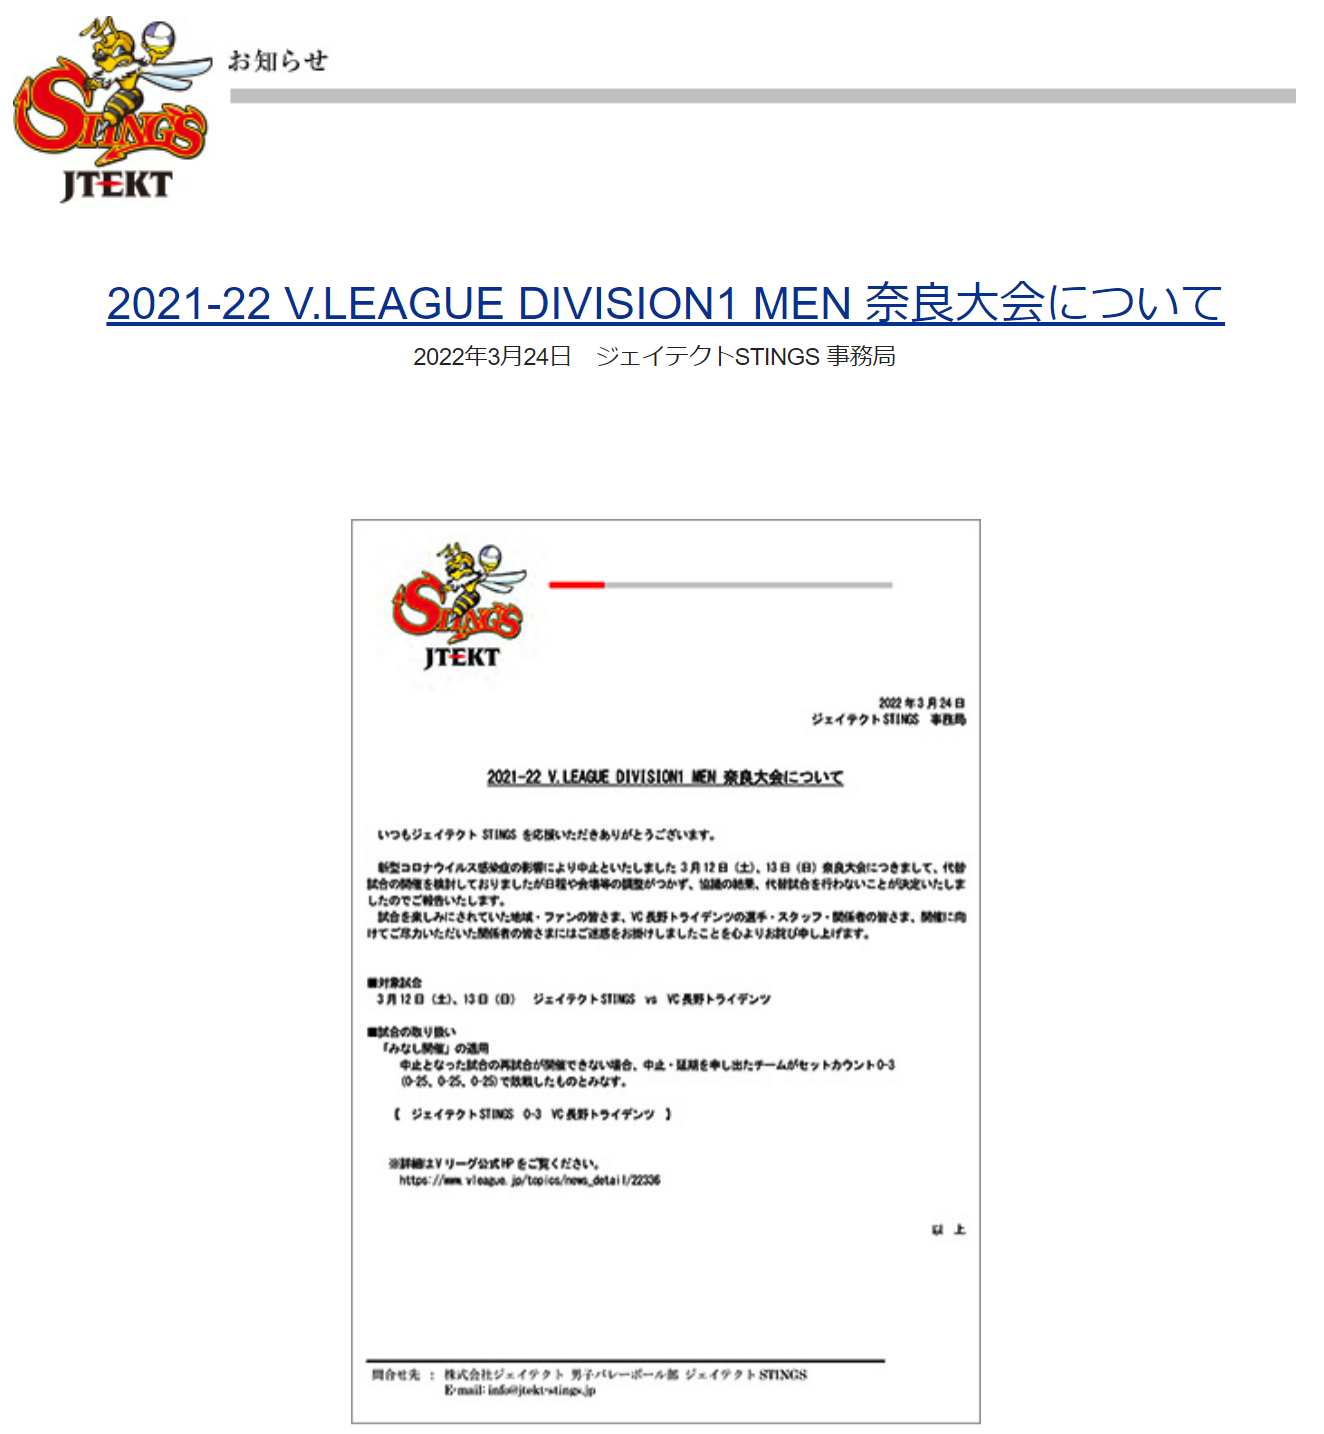 2021-22 V.LEAGUE DIVISION1 MEN 奈良大会について